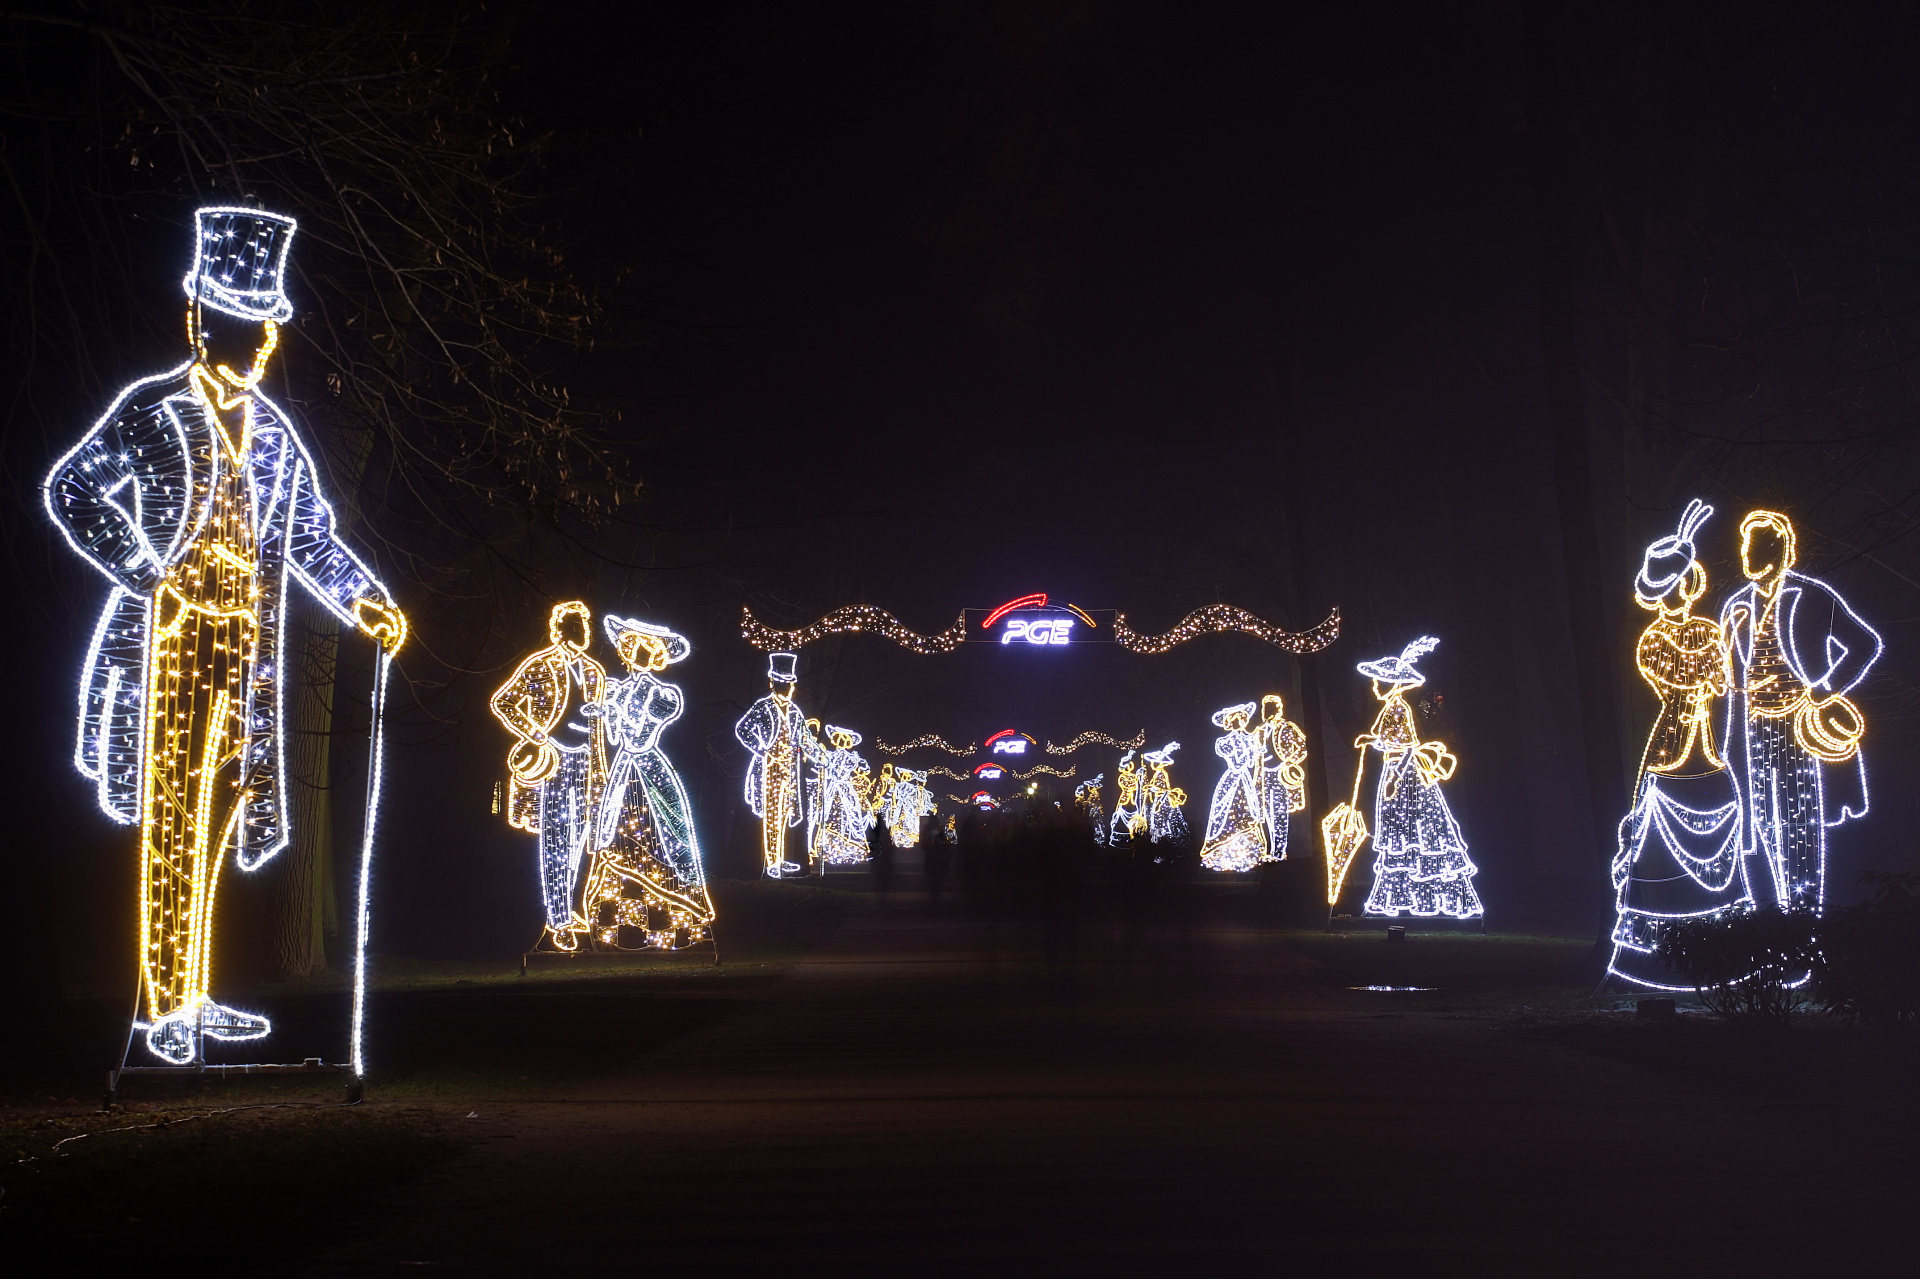 Łazienki Park (Warsaw » Christmas Illumination)